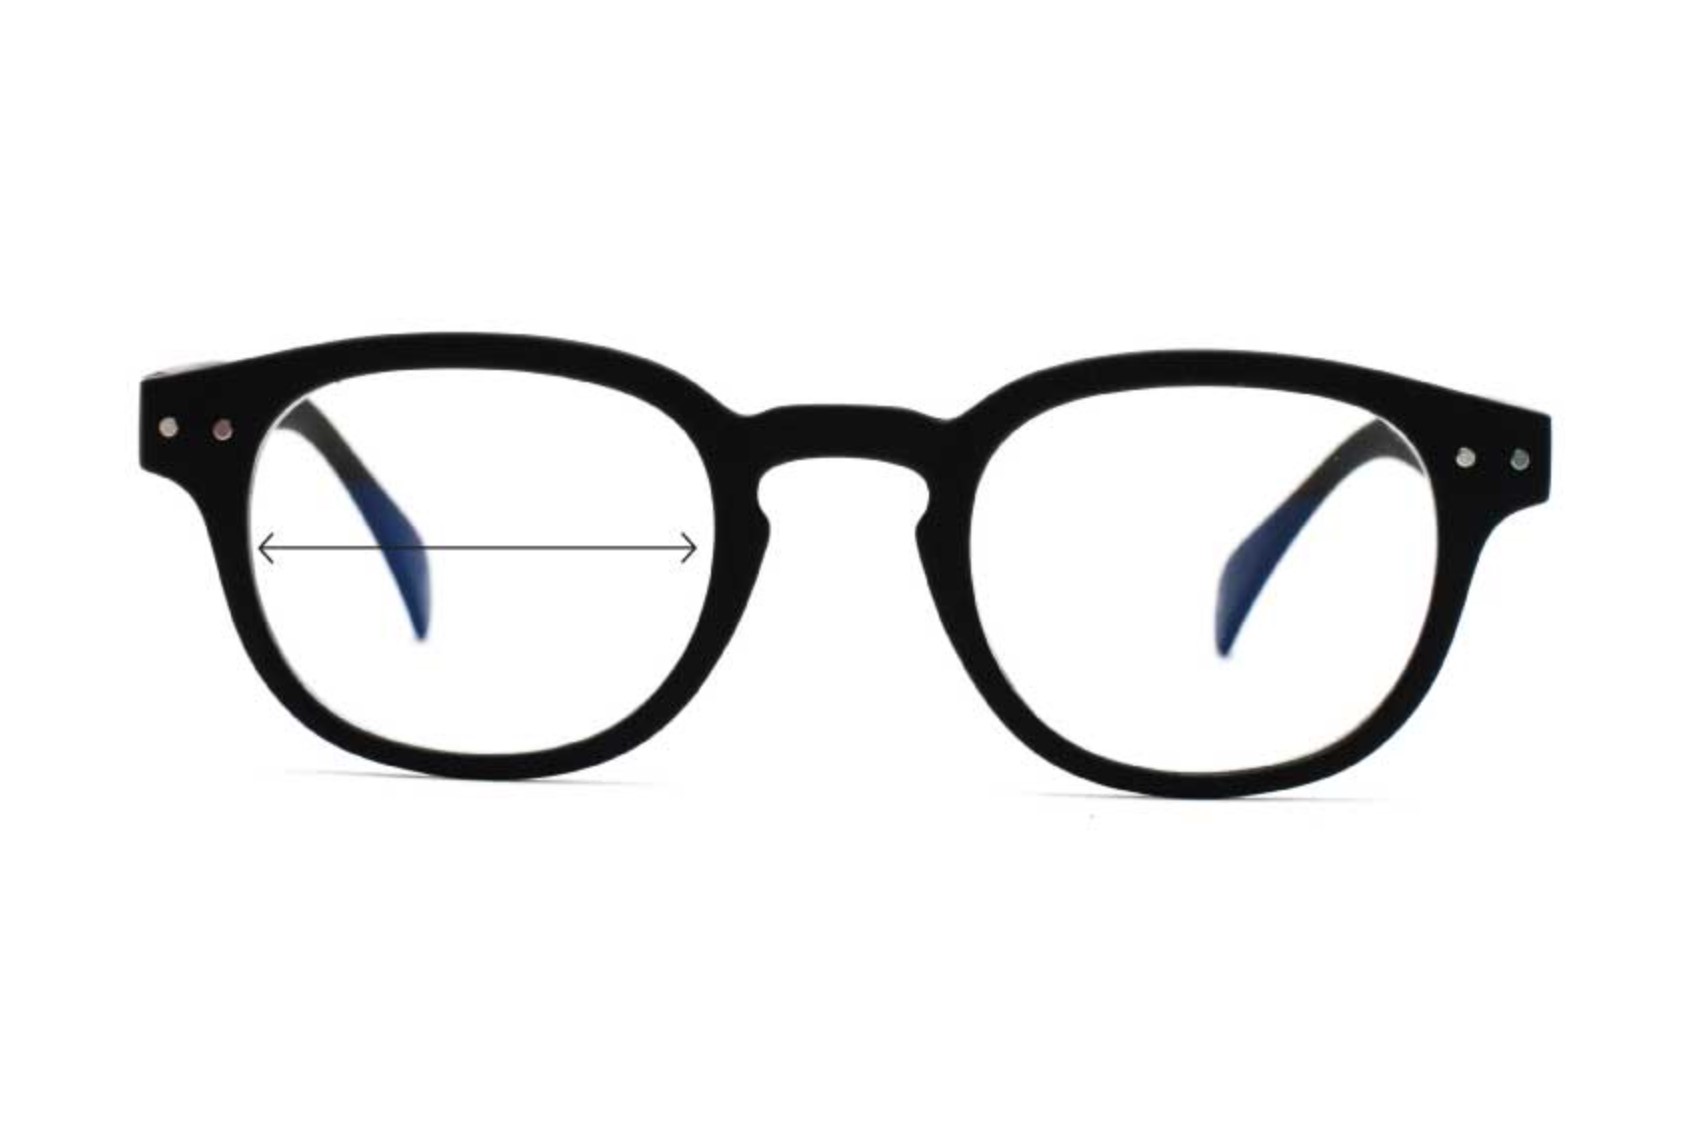 – Anton GEN 8 w Transition Glasses, Women's